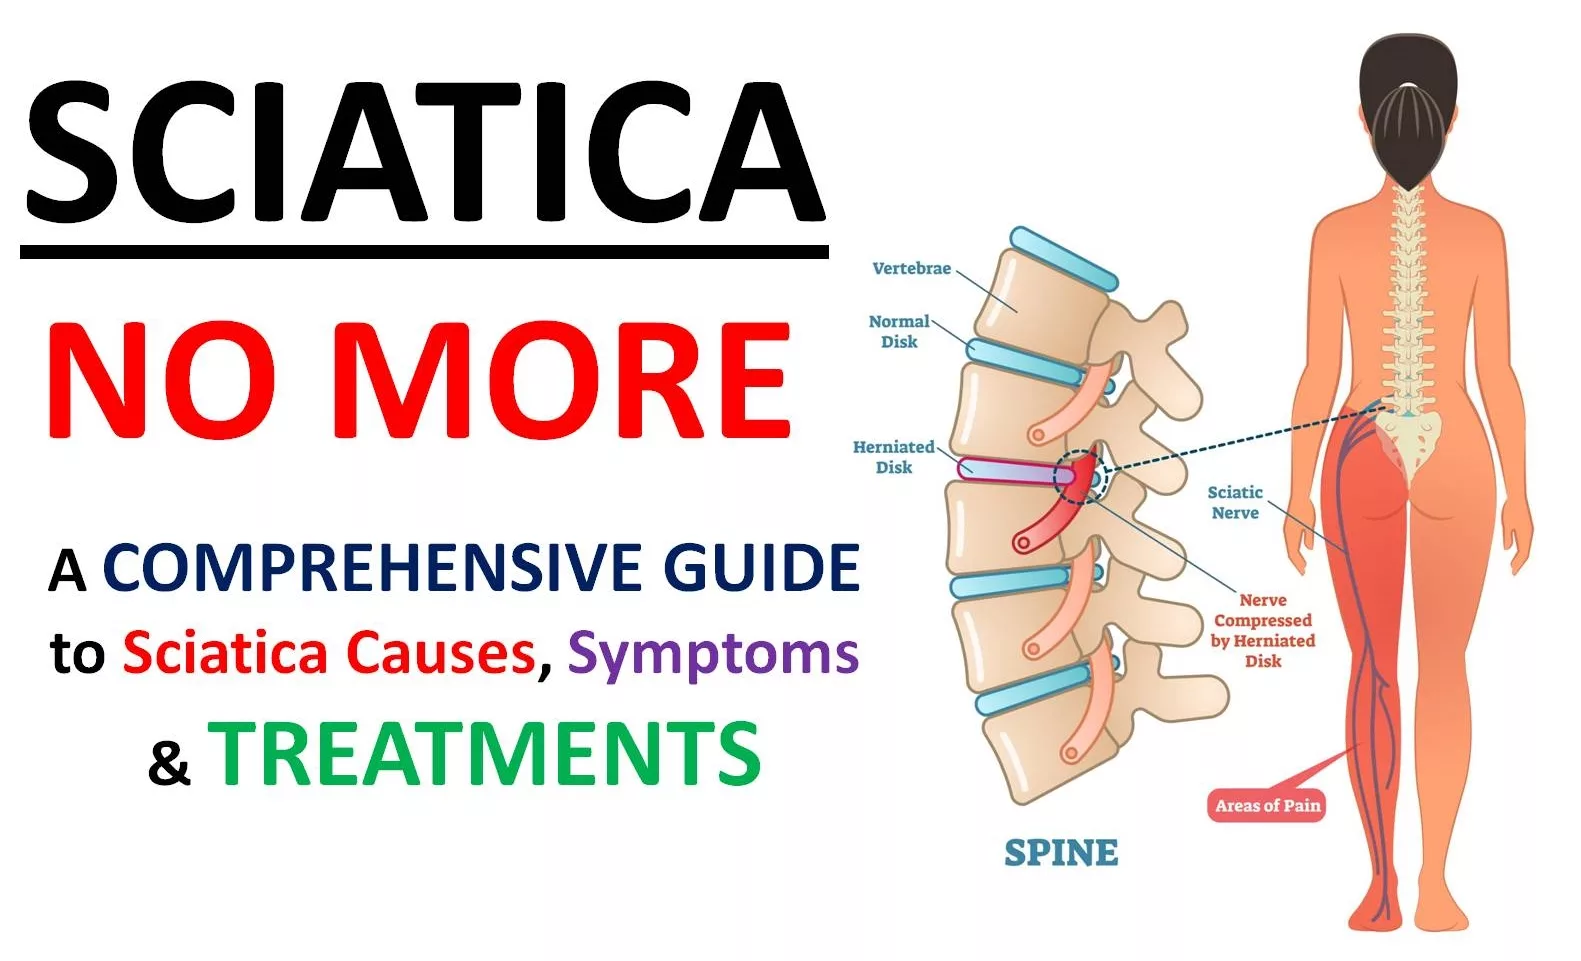 Sciatica: Causes, Symptoms, and Effective Exercises